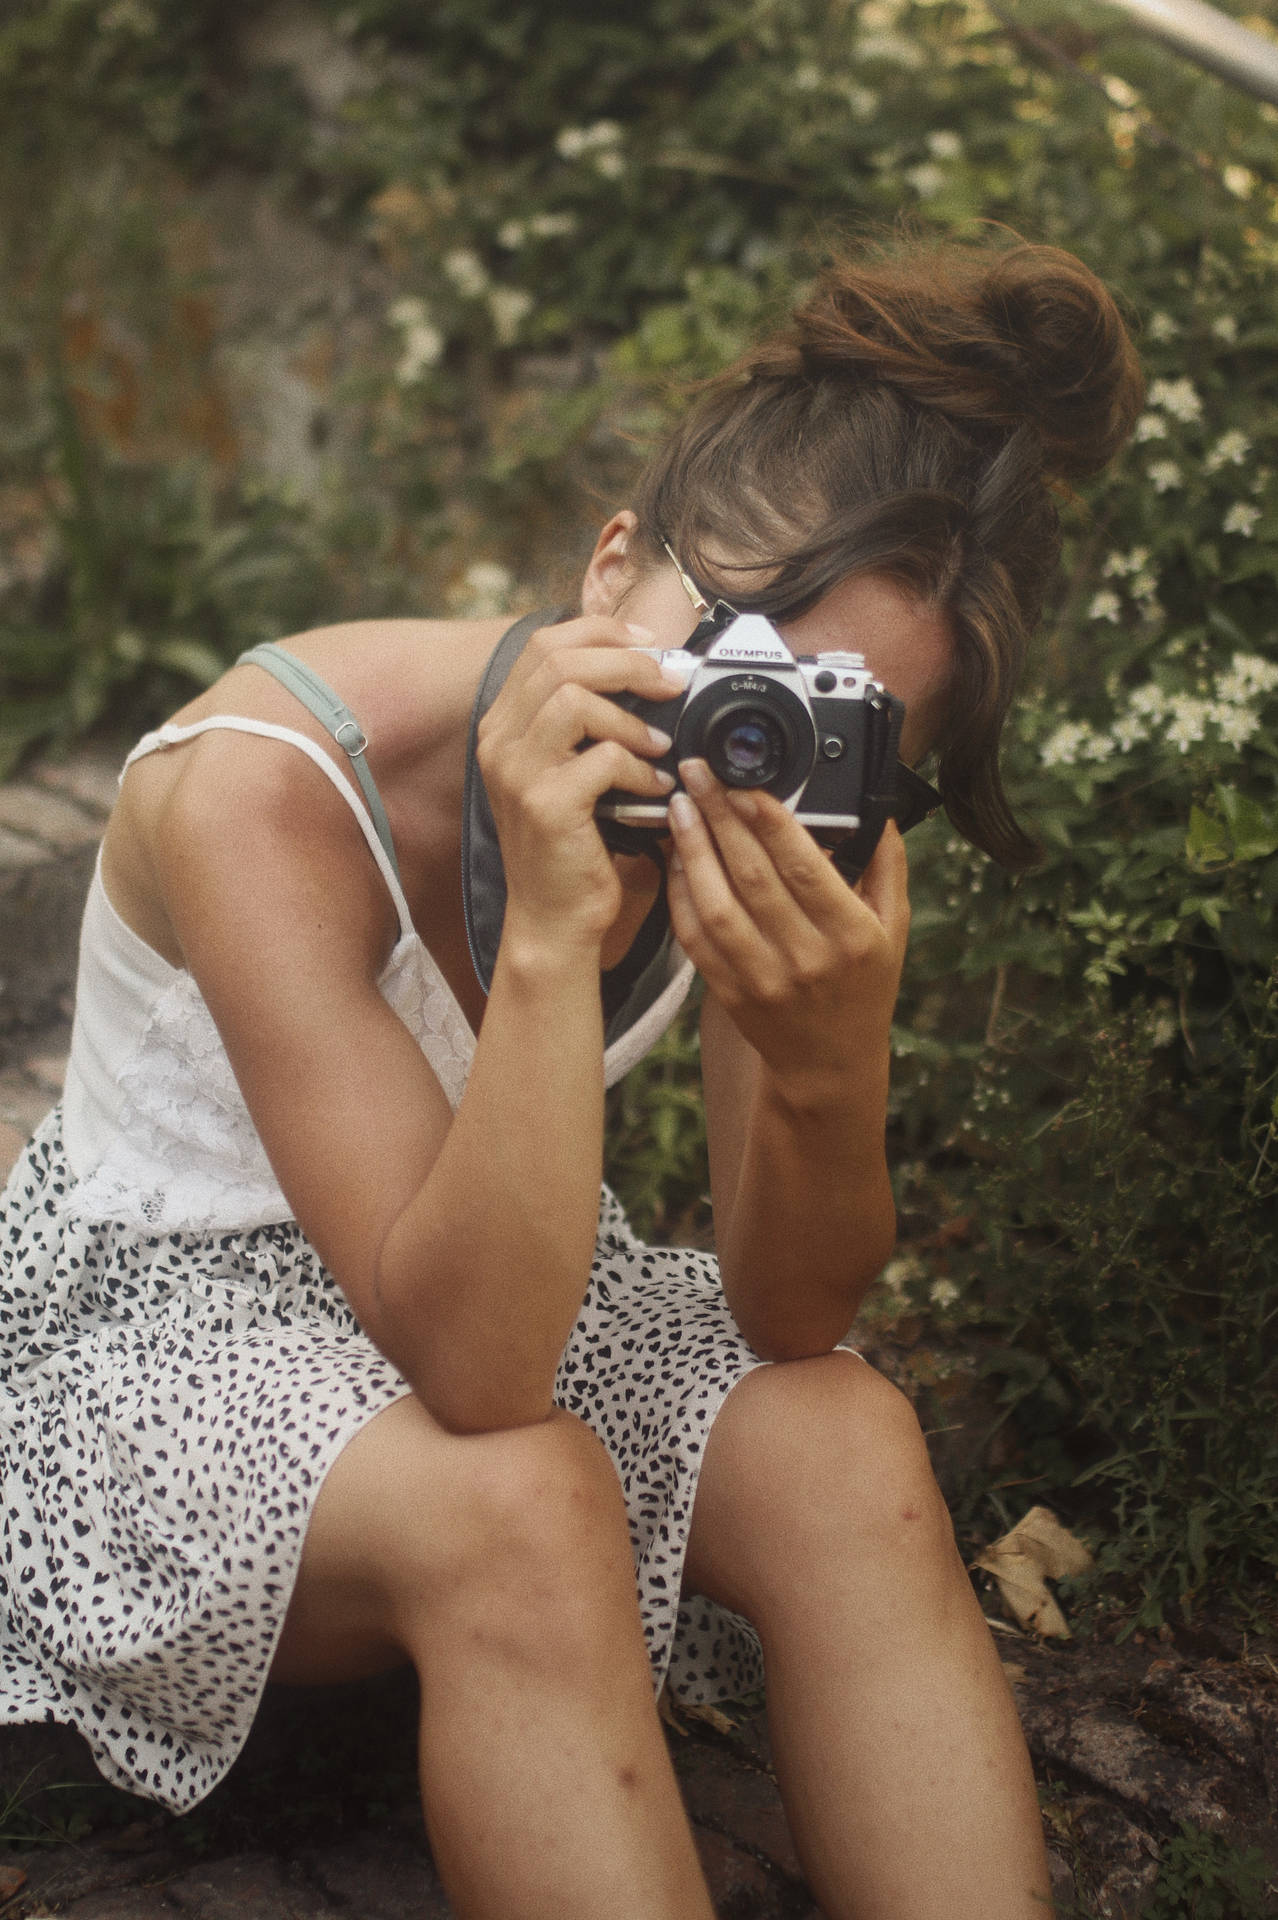 Woman holding a DSLR camera taking garden photo wallpaper.